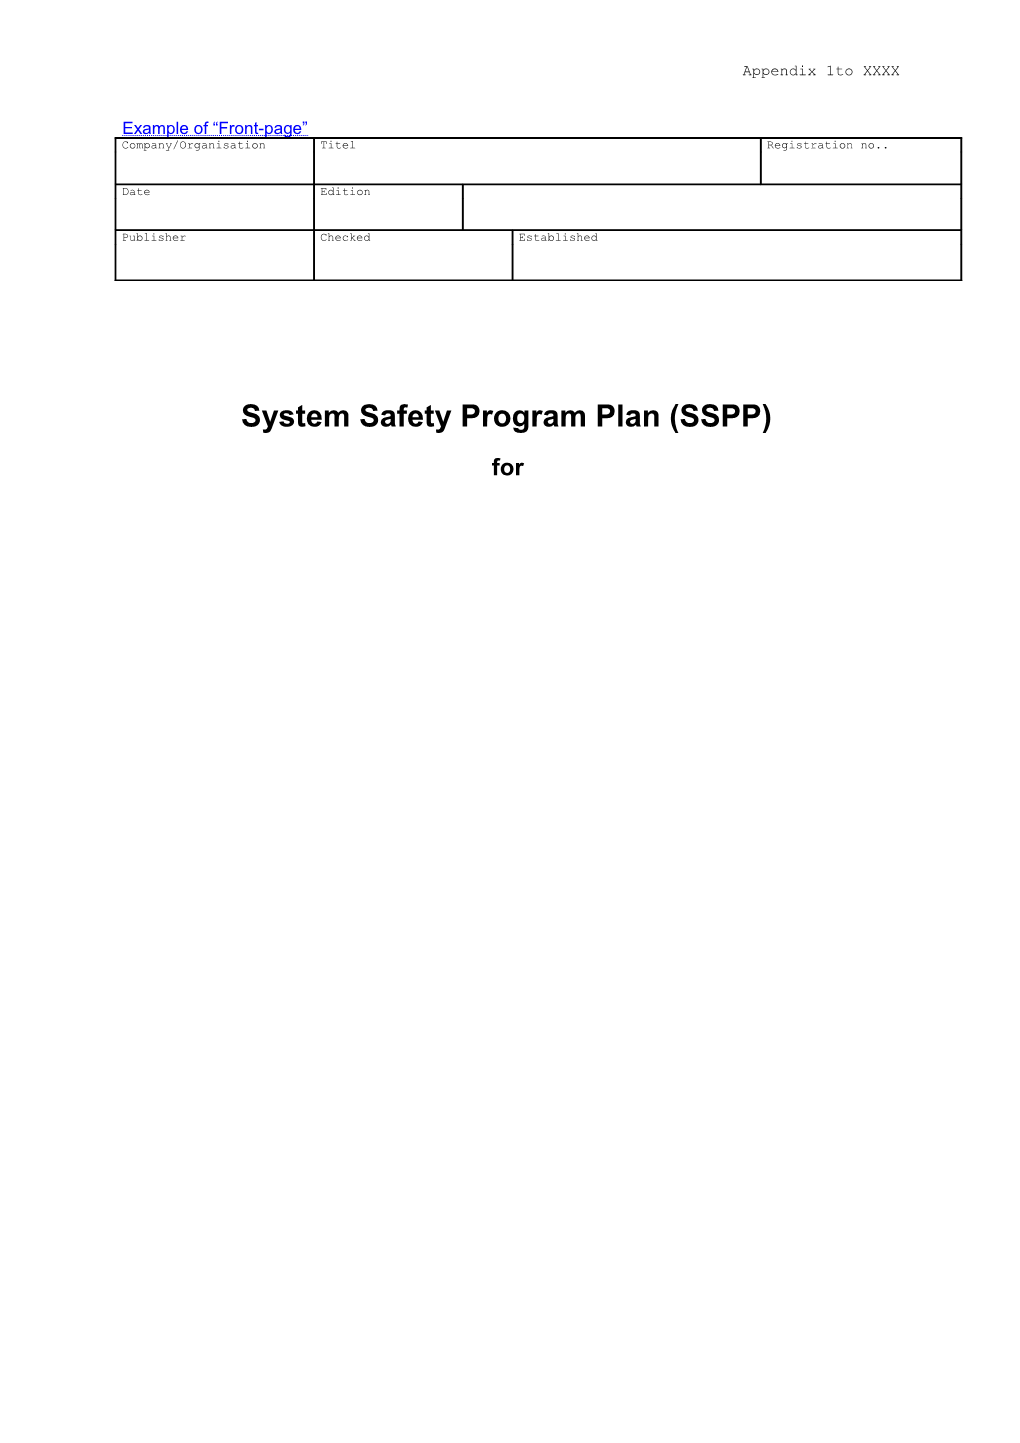 System Safety Program Plan (SSPP)